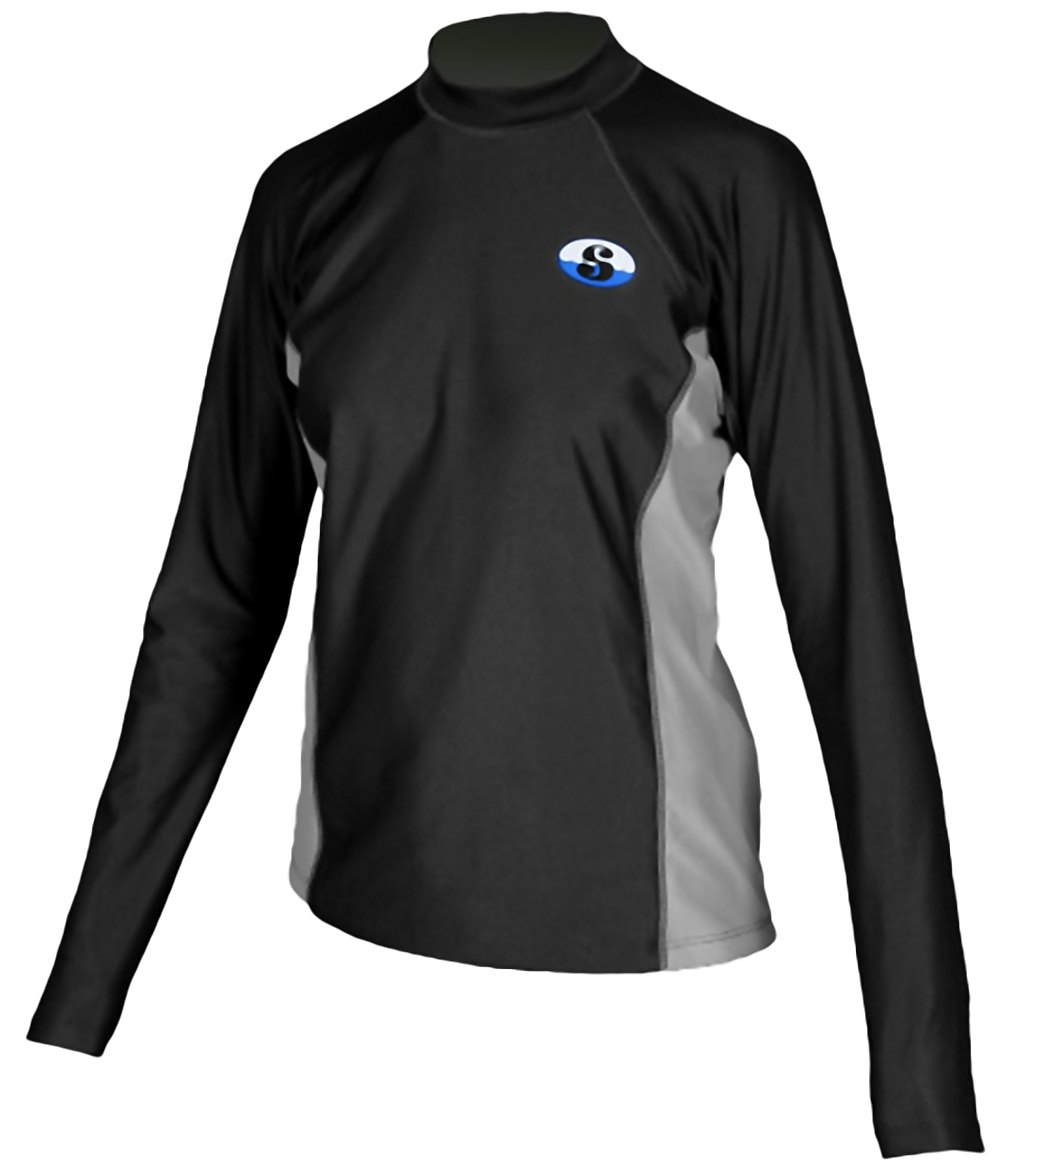 Splashgear Island Shirt - Black/Silver Large Polyester - Swimoutlet.com